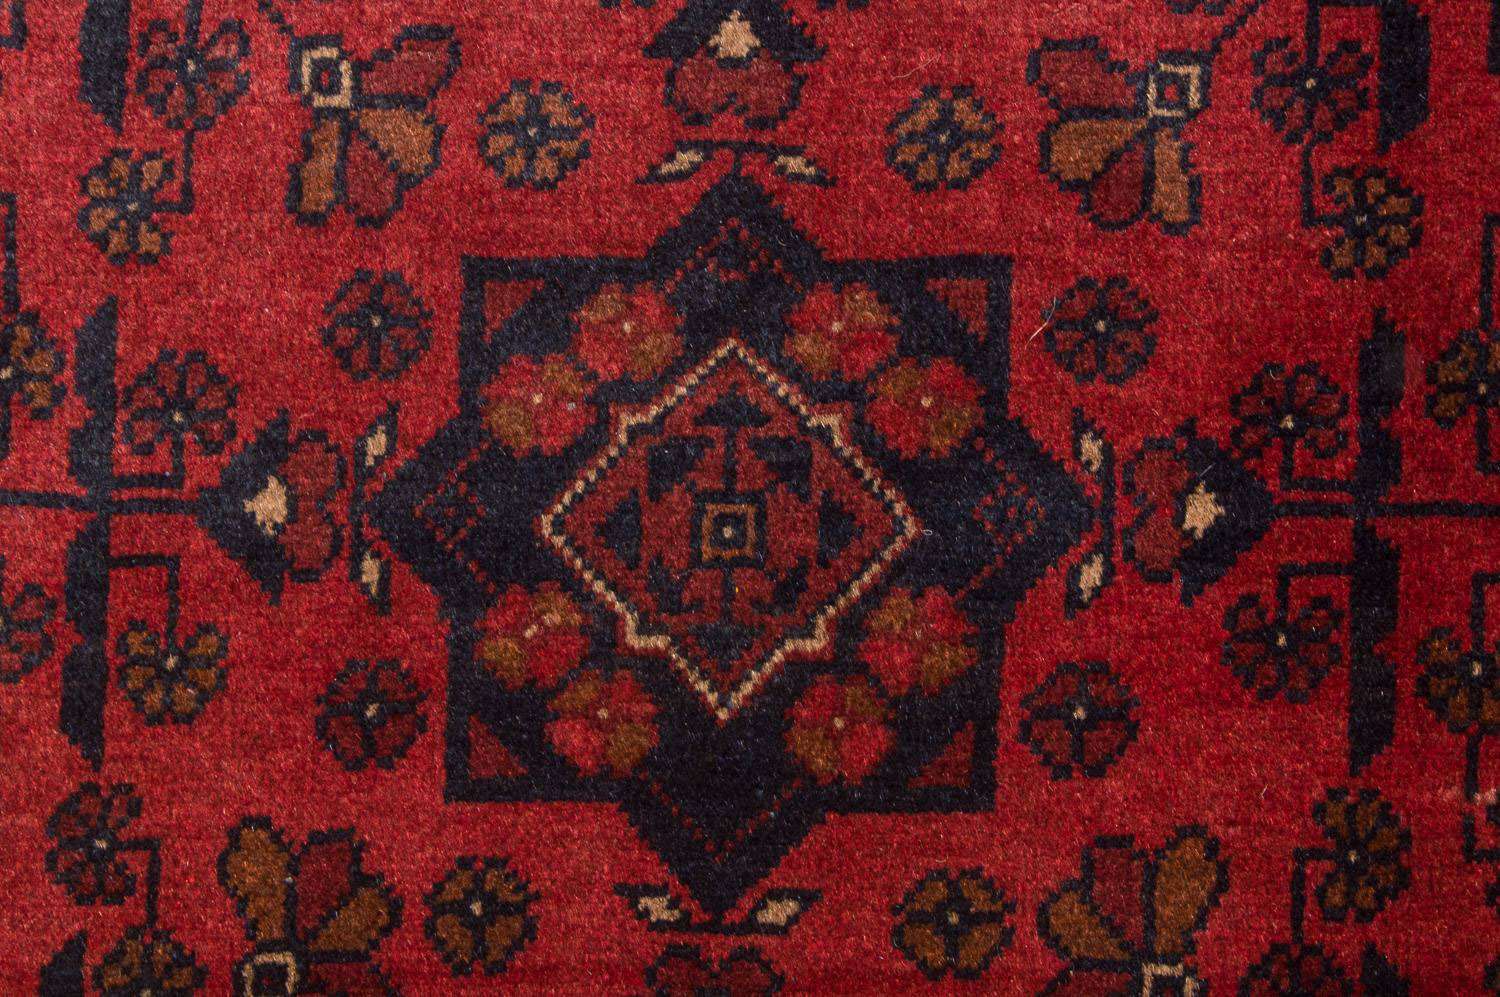 Afghan Rug - Kunduz - 186 x 122 cm - red